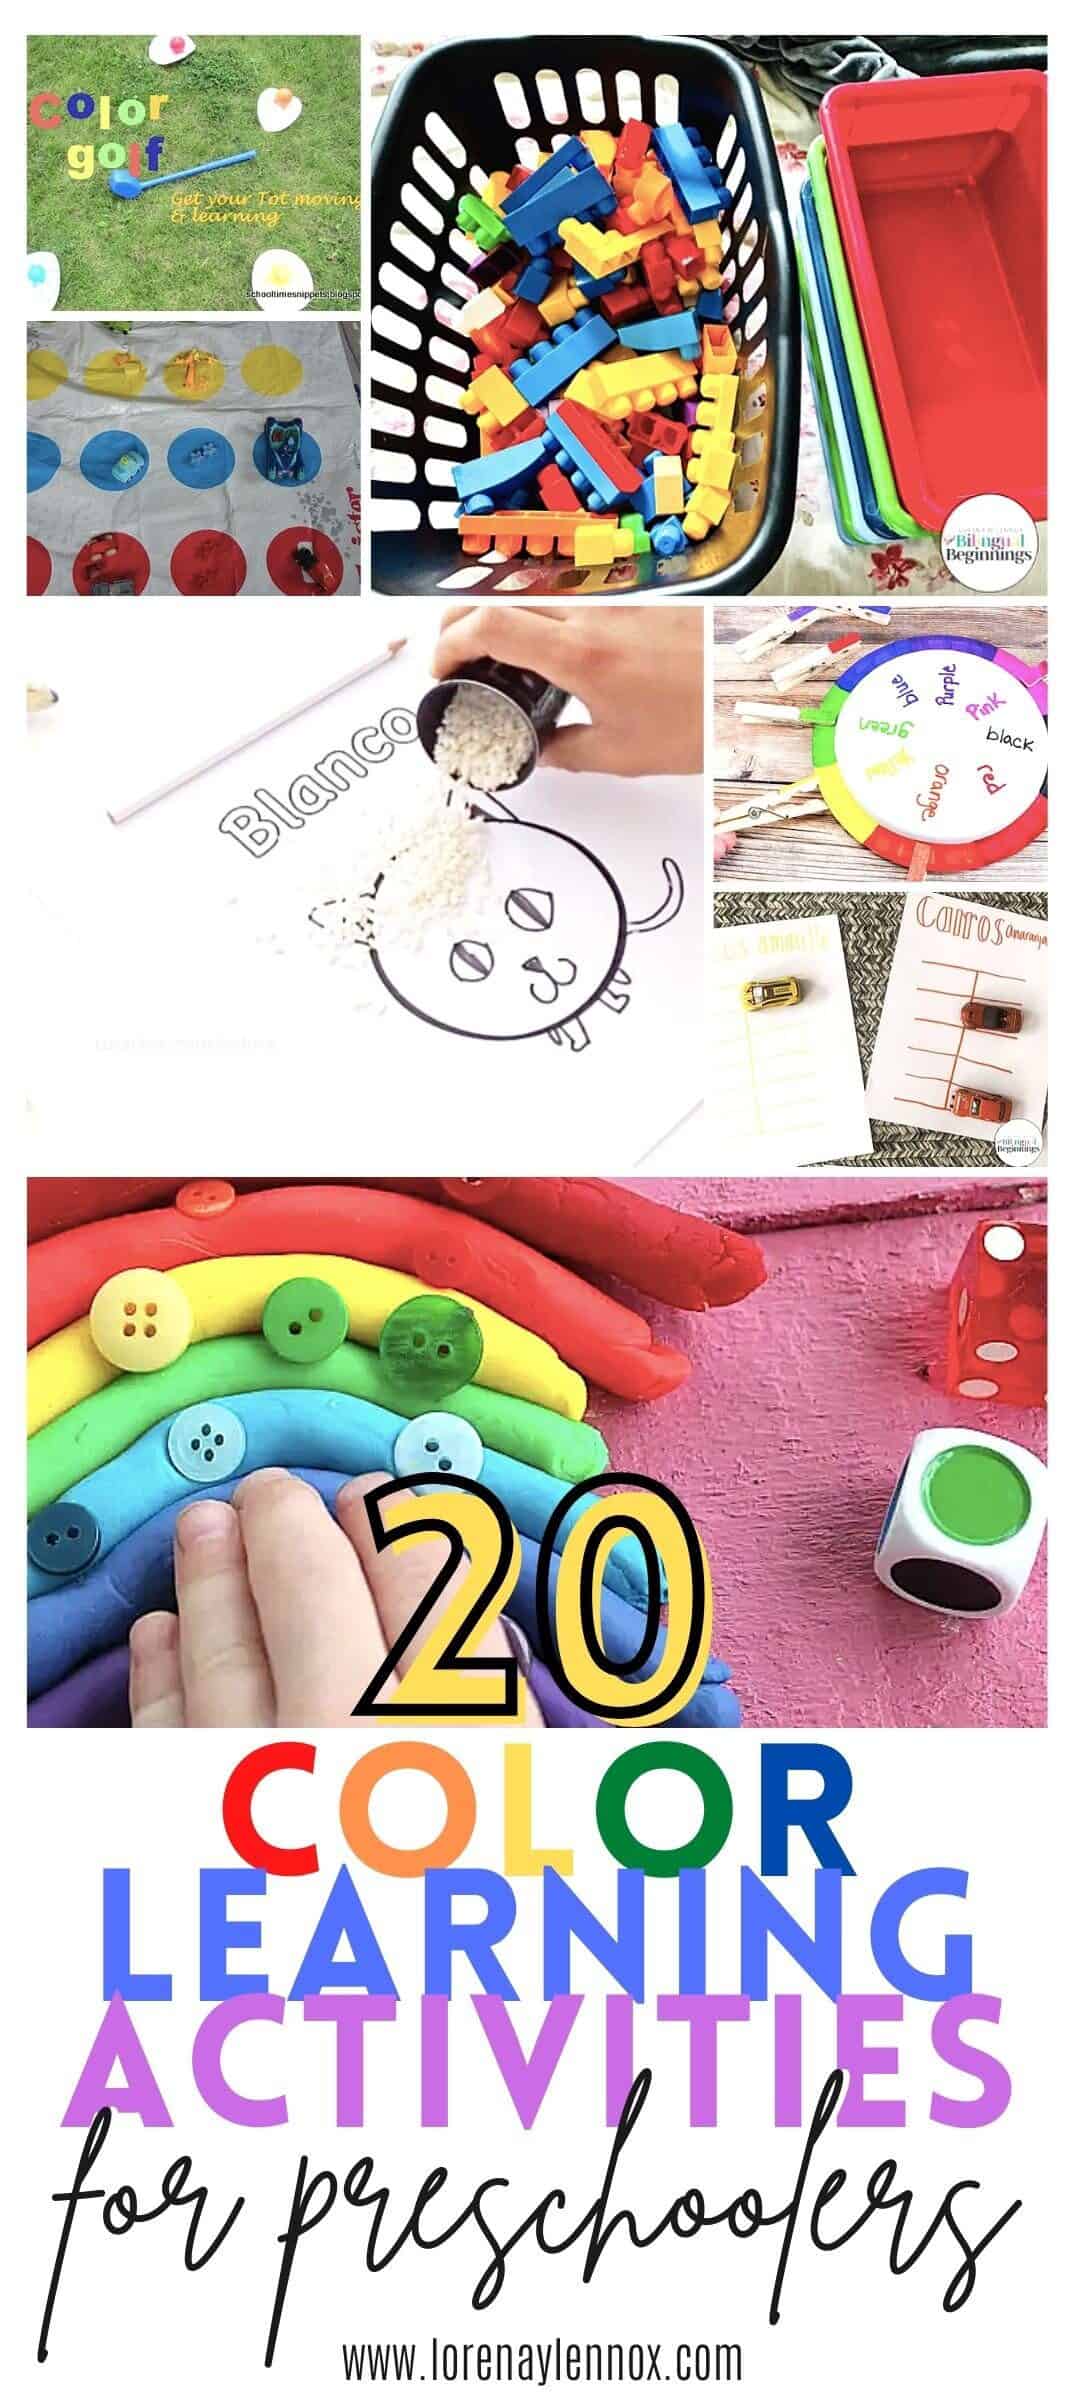 Color Learning activities for preschoolers